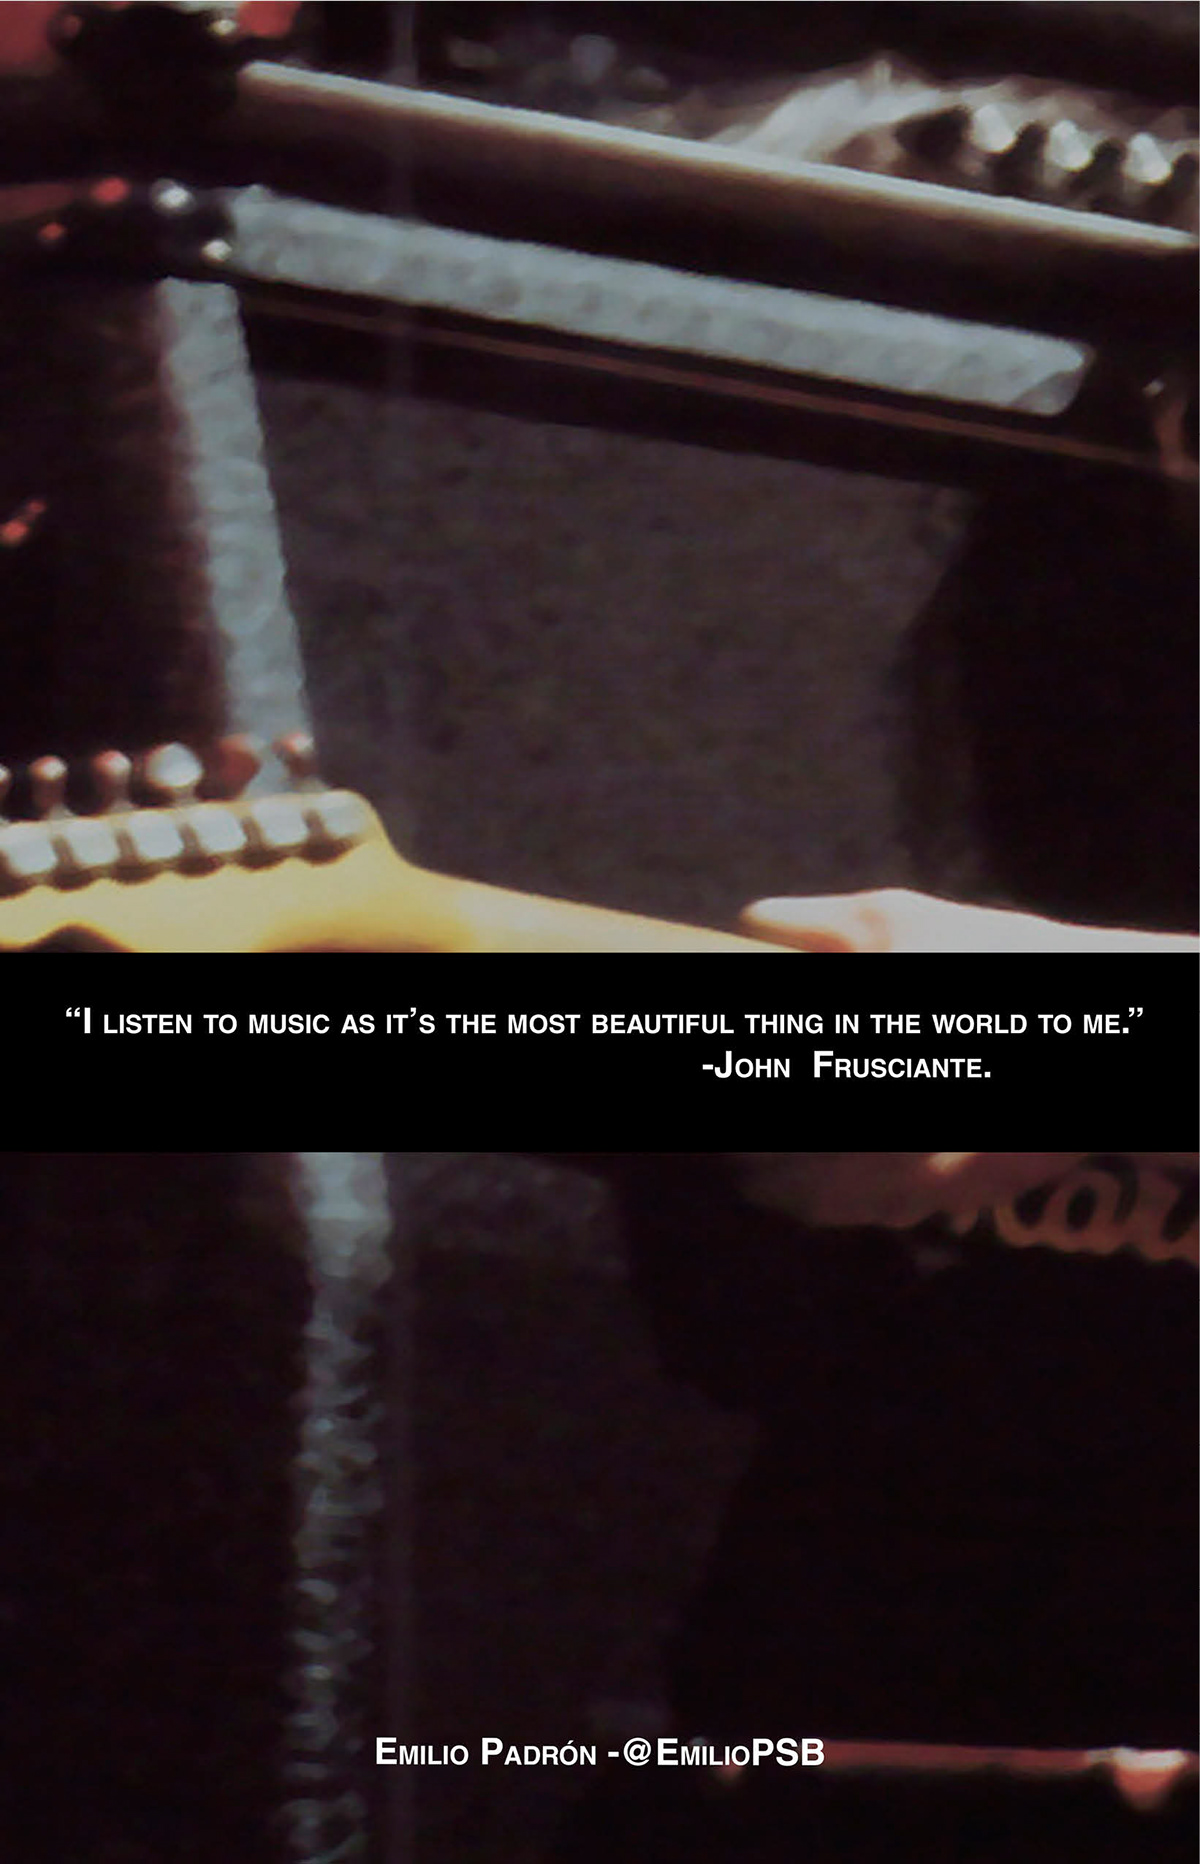 john frusciante fanzine red Hot chili peppers editorial musician guitar player band